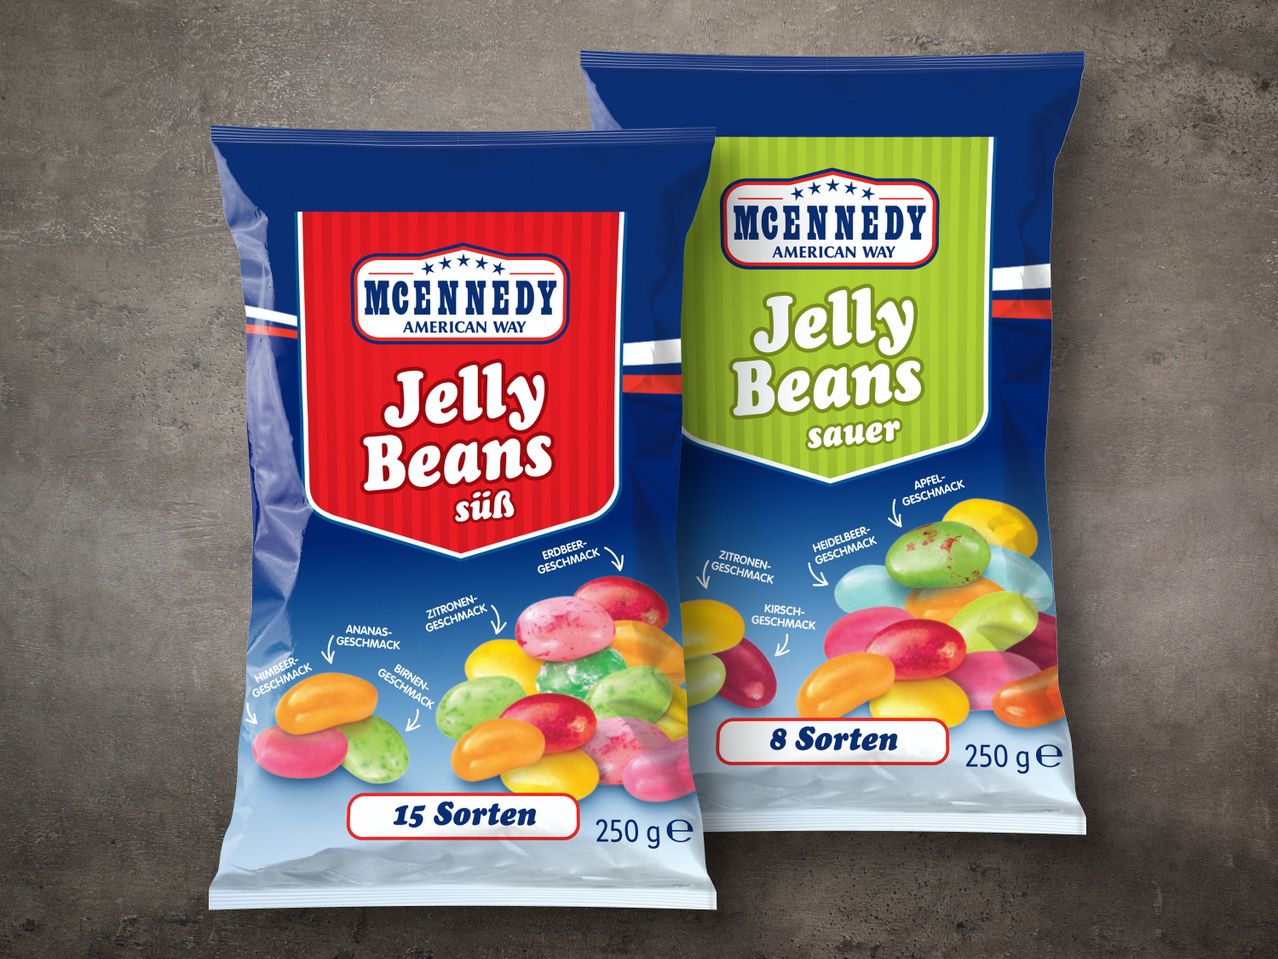 McEnnedy Beans Jelly